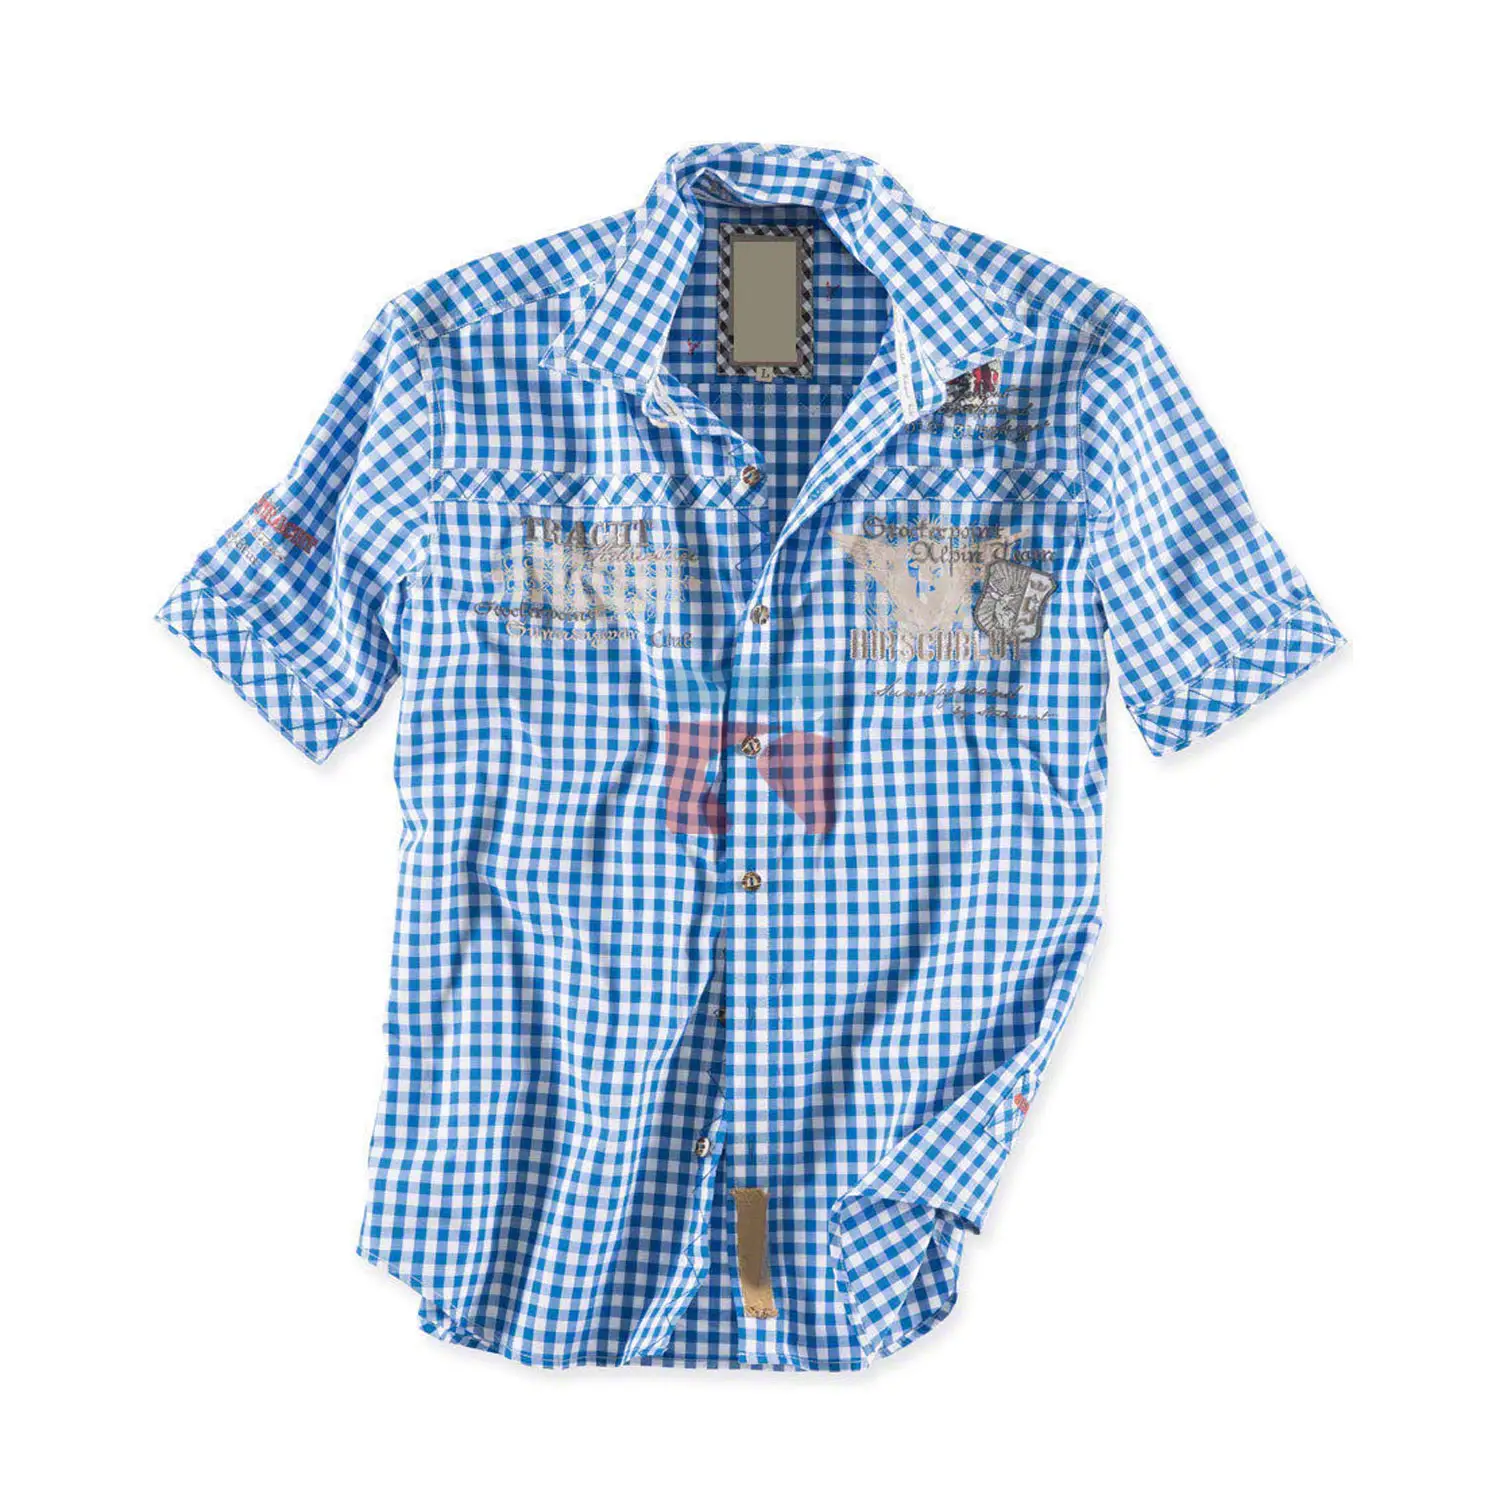 Men Bavarian Shirt Full Sleeve Long Oktoberfest Costume Sky Blue Check Outfit (Trachten Lederhosen Shirt)